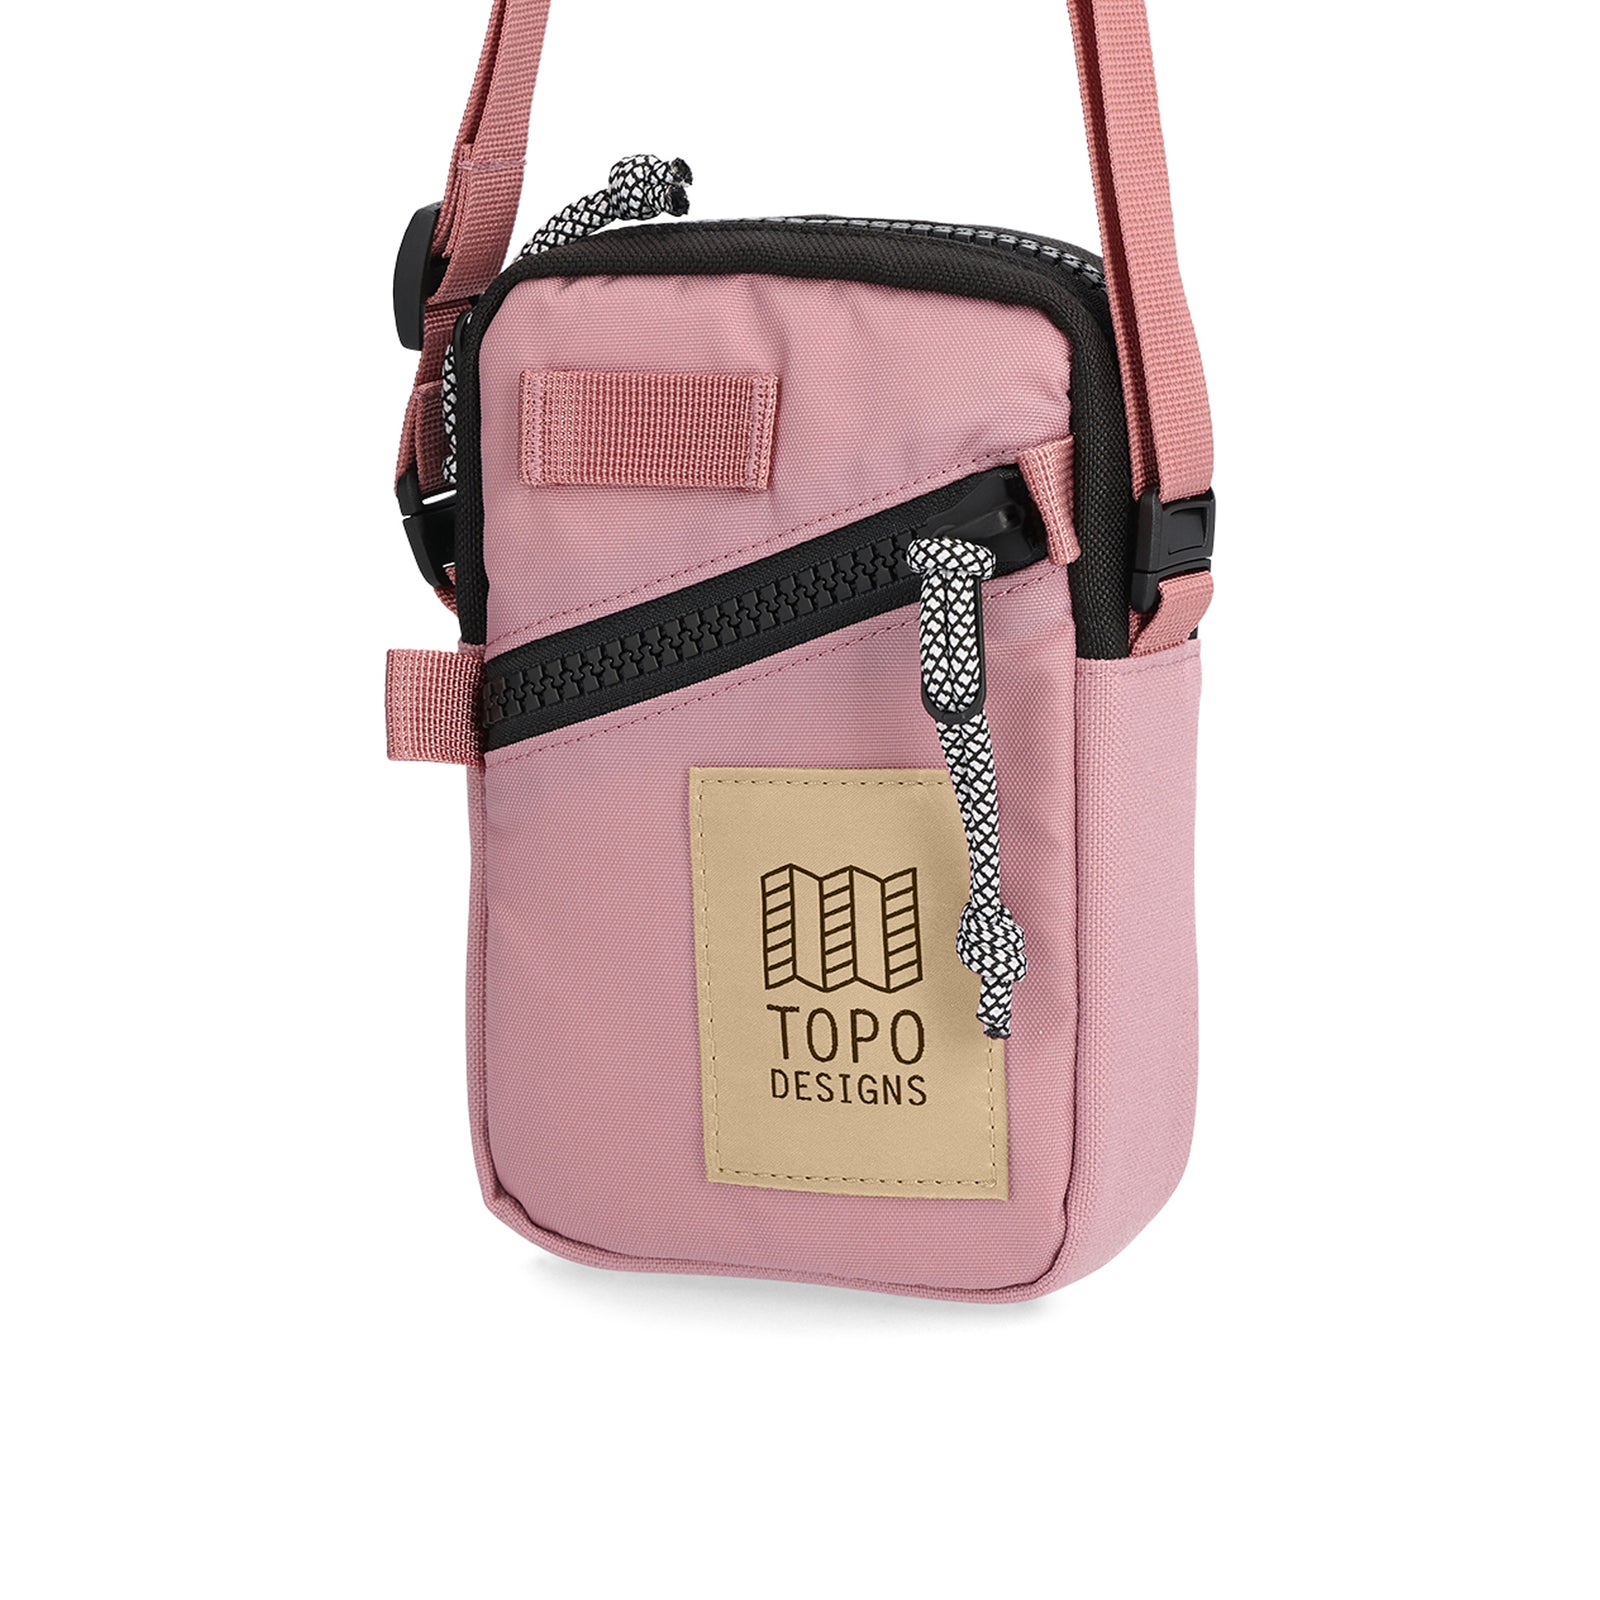 Front View of Topo Designs Mini Shoulder Bag in "Rose"